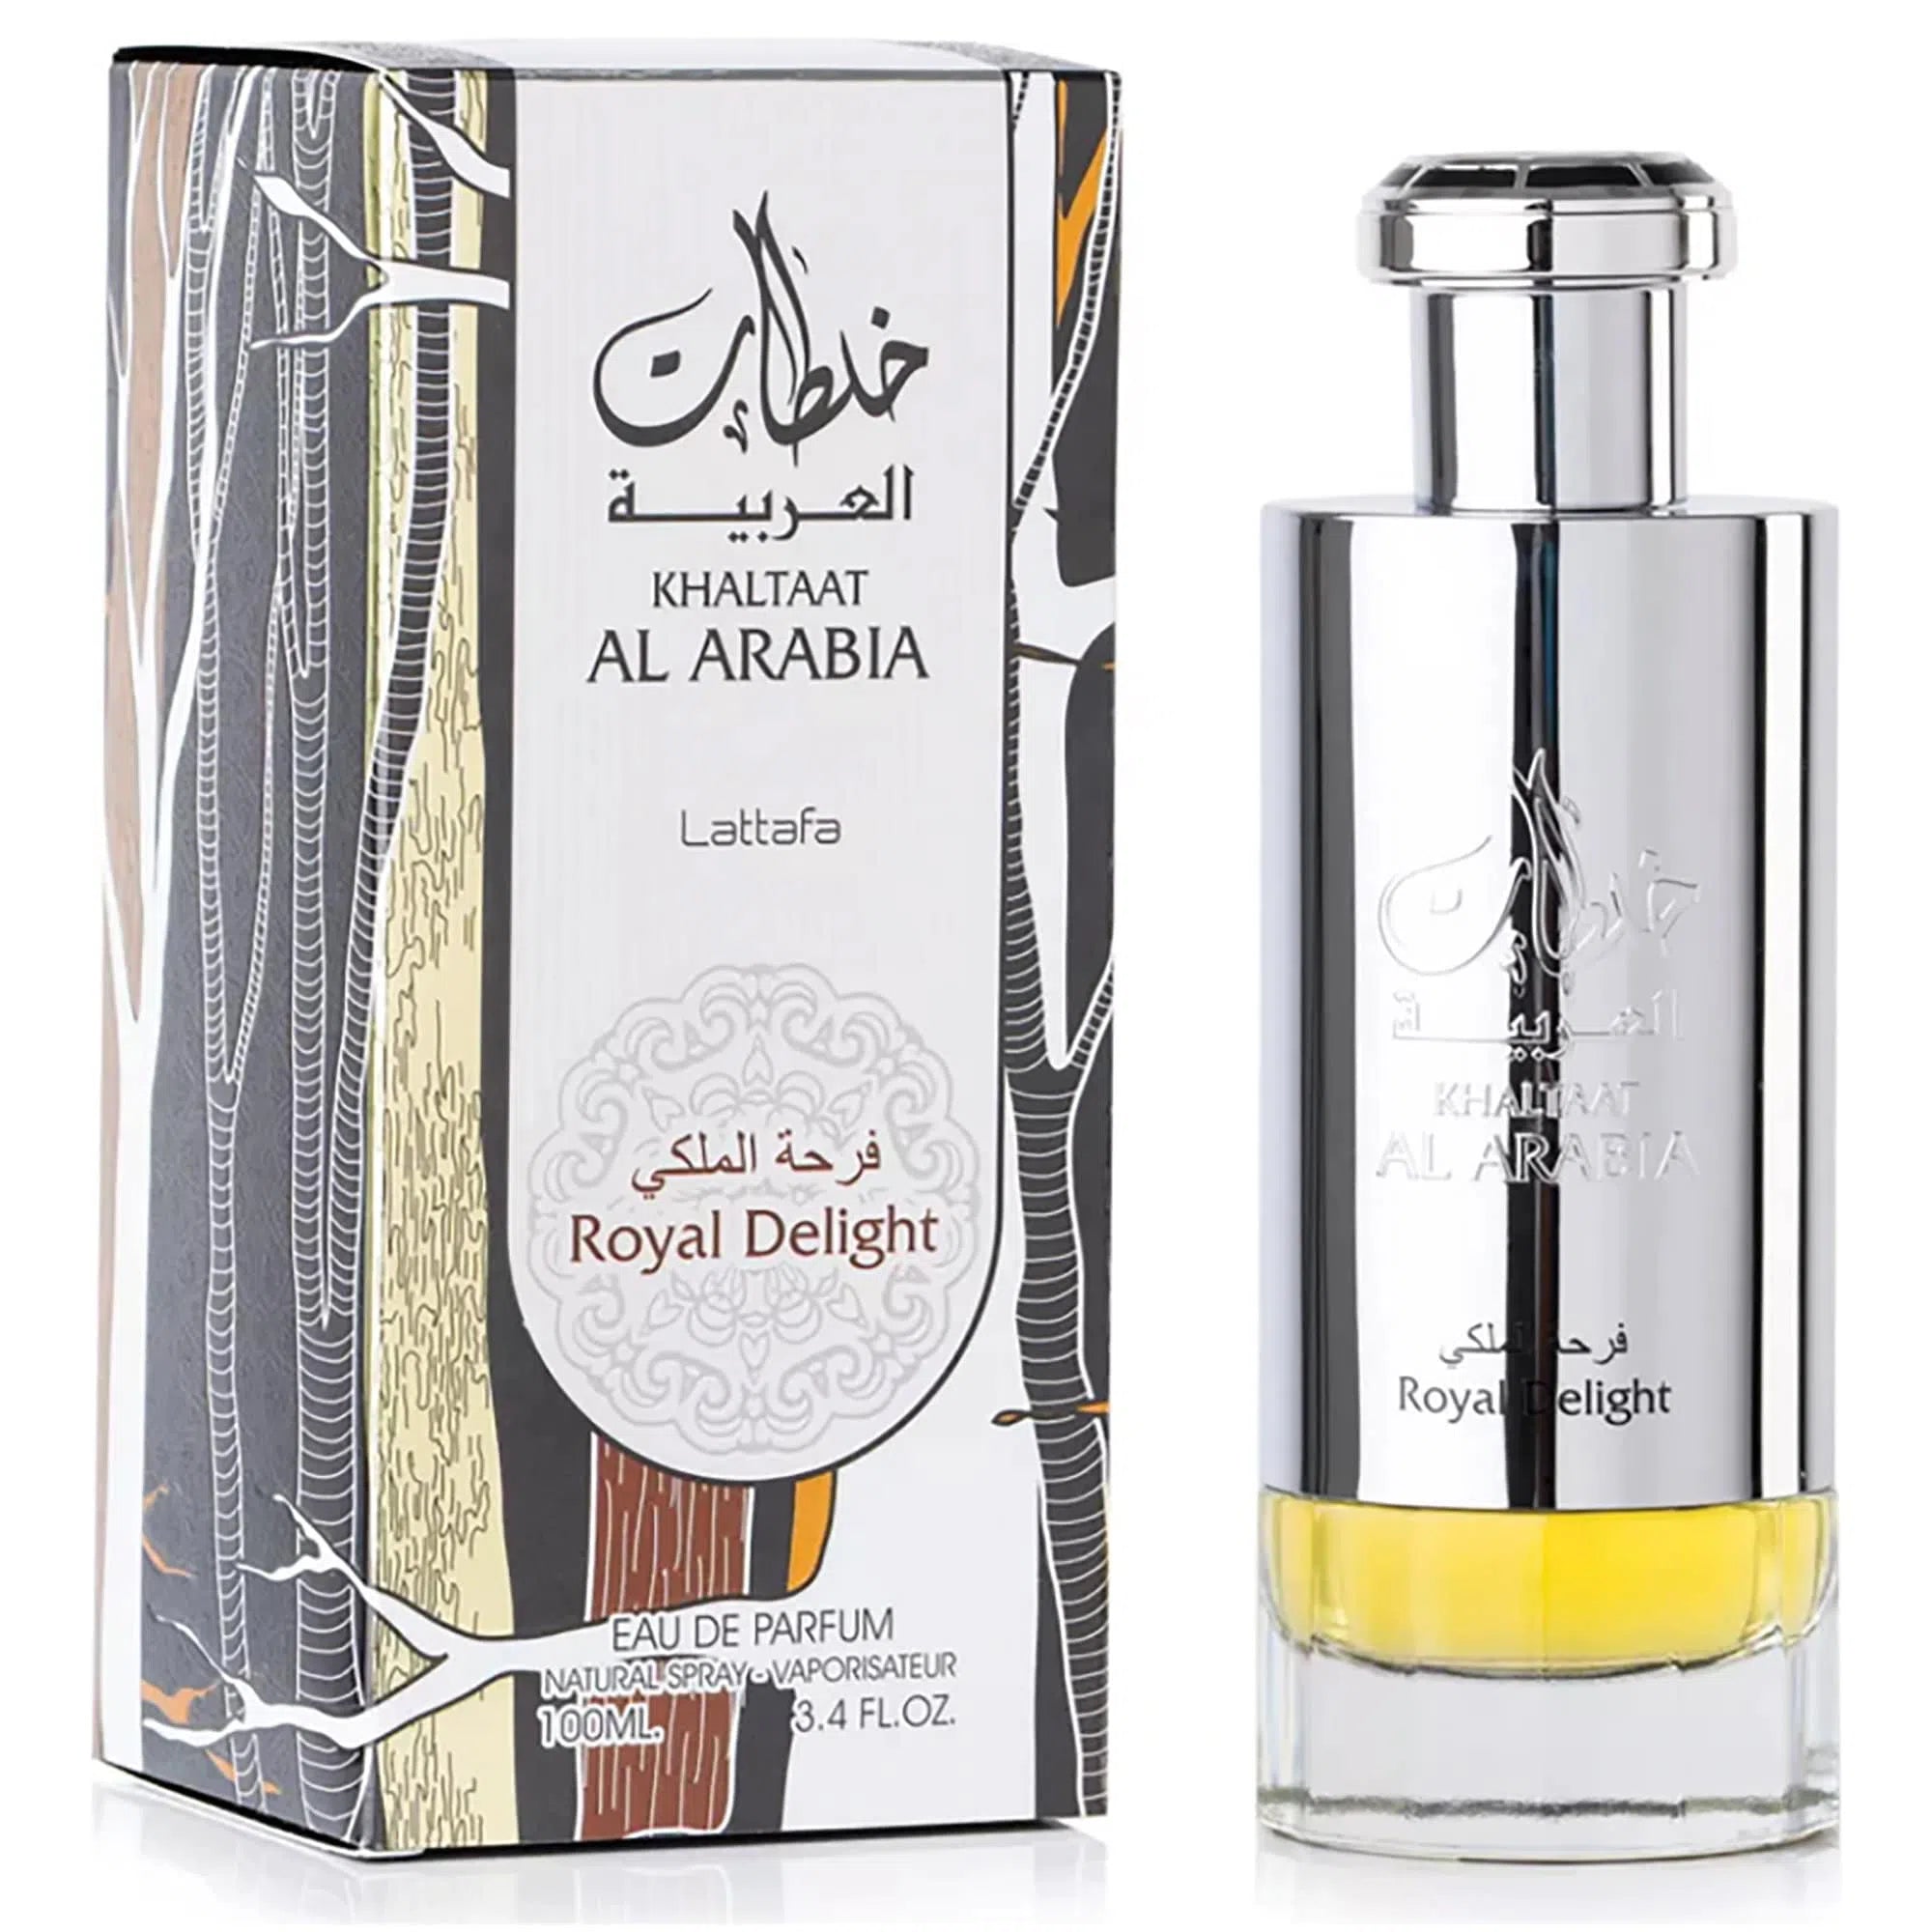 Perfume Lattafa Khaltat Al Arabia Royal Delight Silver EDP (U) / 100 ml - 6291106065060- Prive Perfumes Honduras